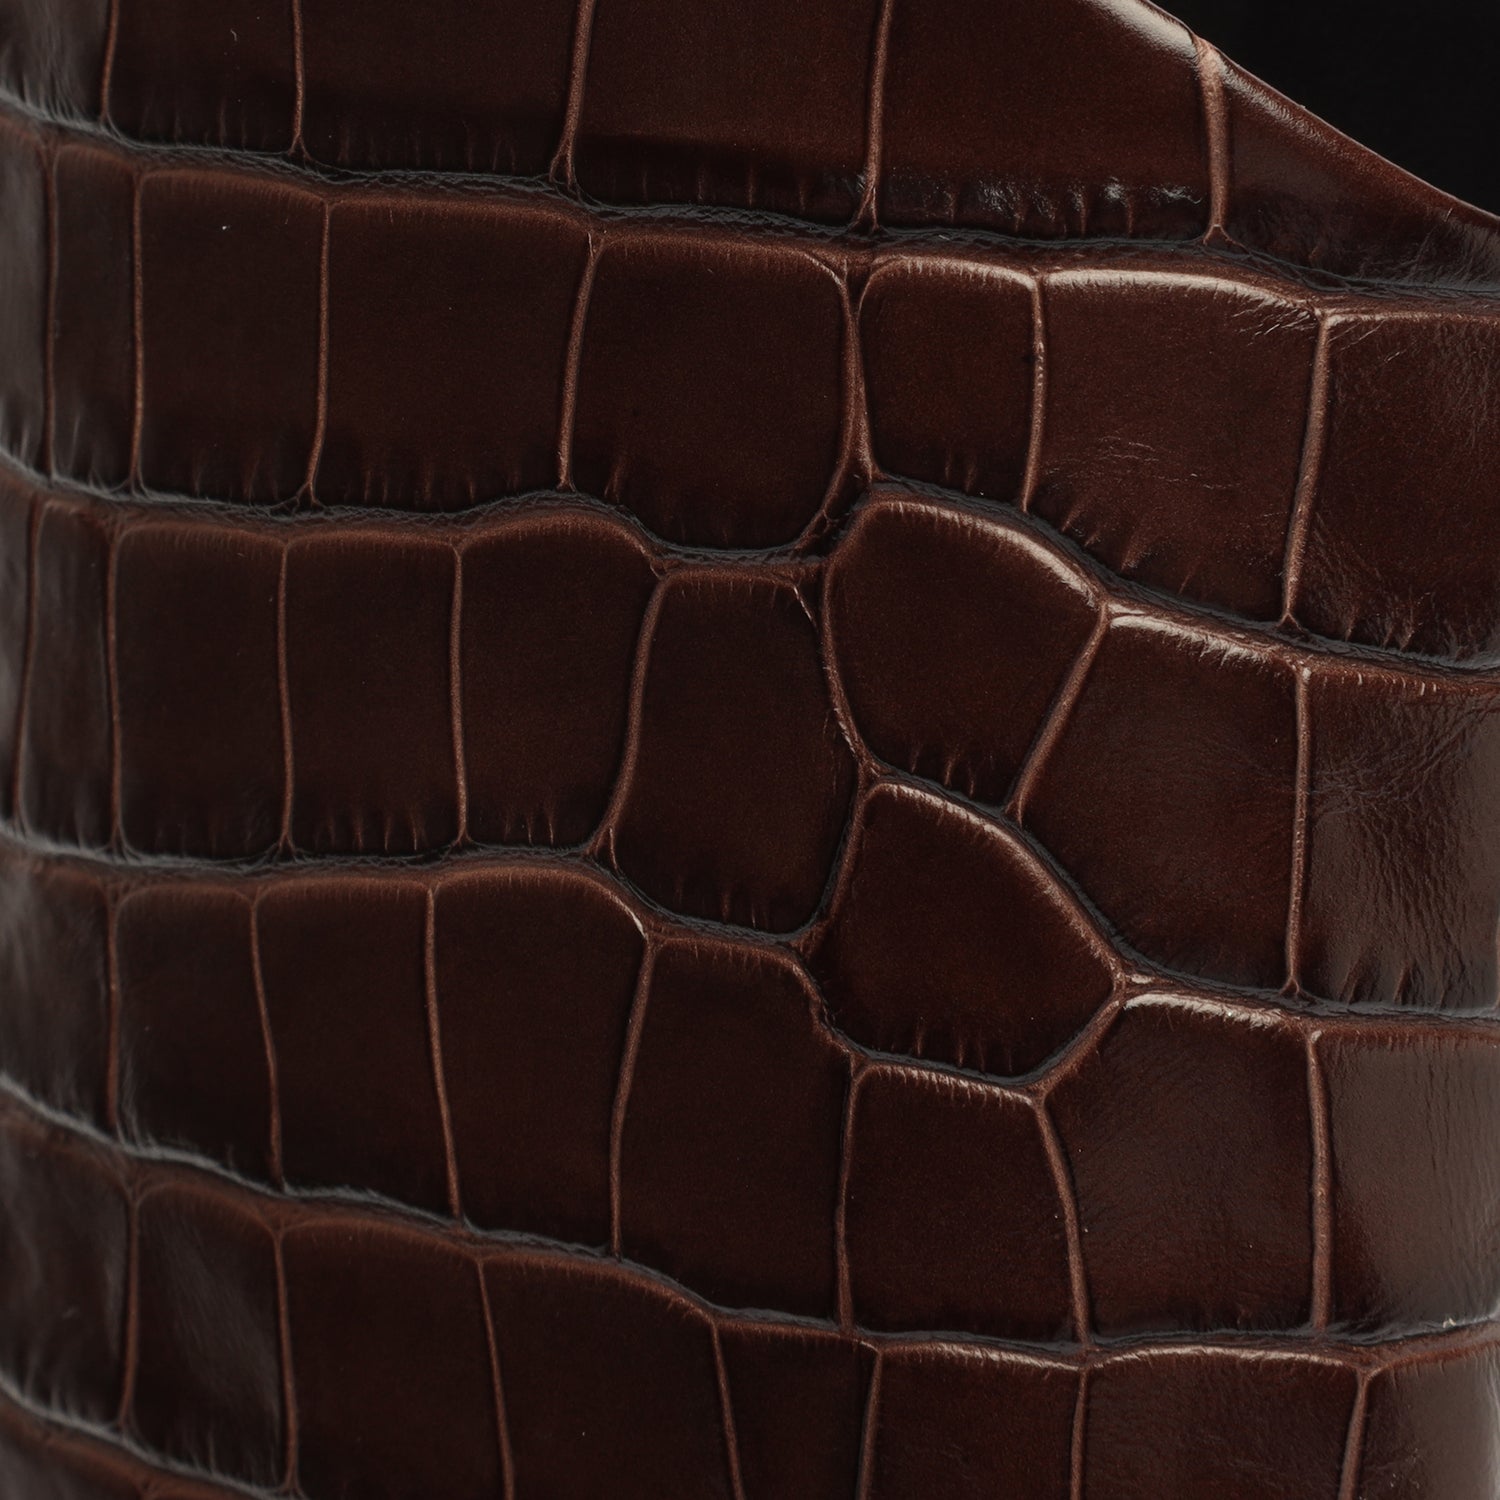 Maryana Block Boot Dark Chocolate Crocodile Effect Leather